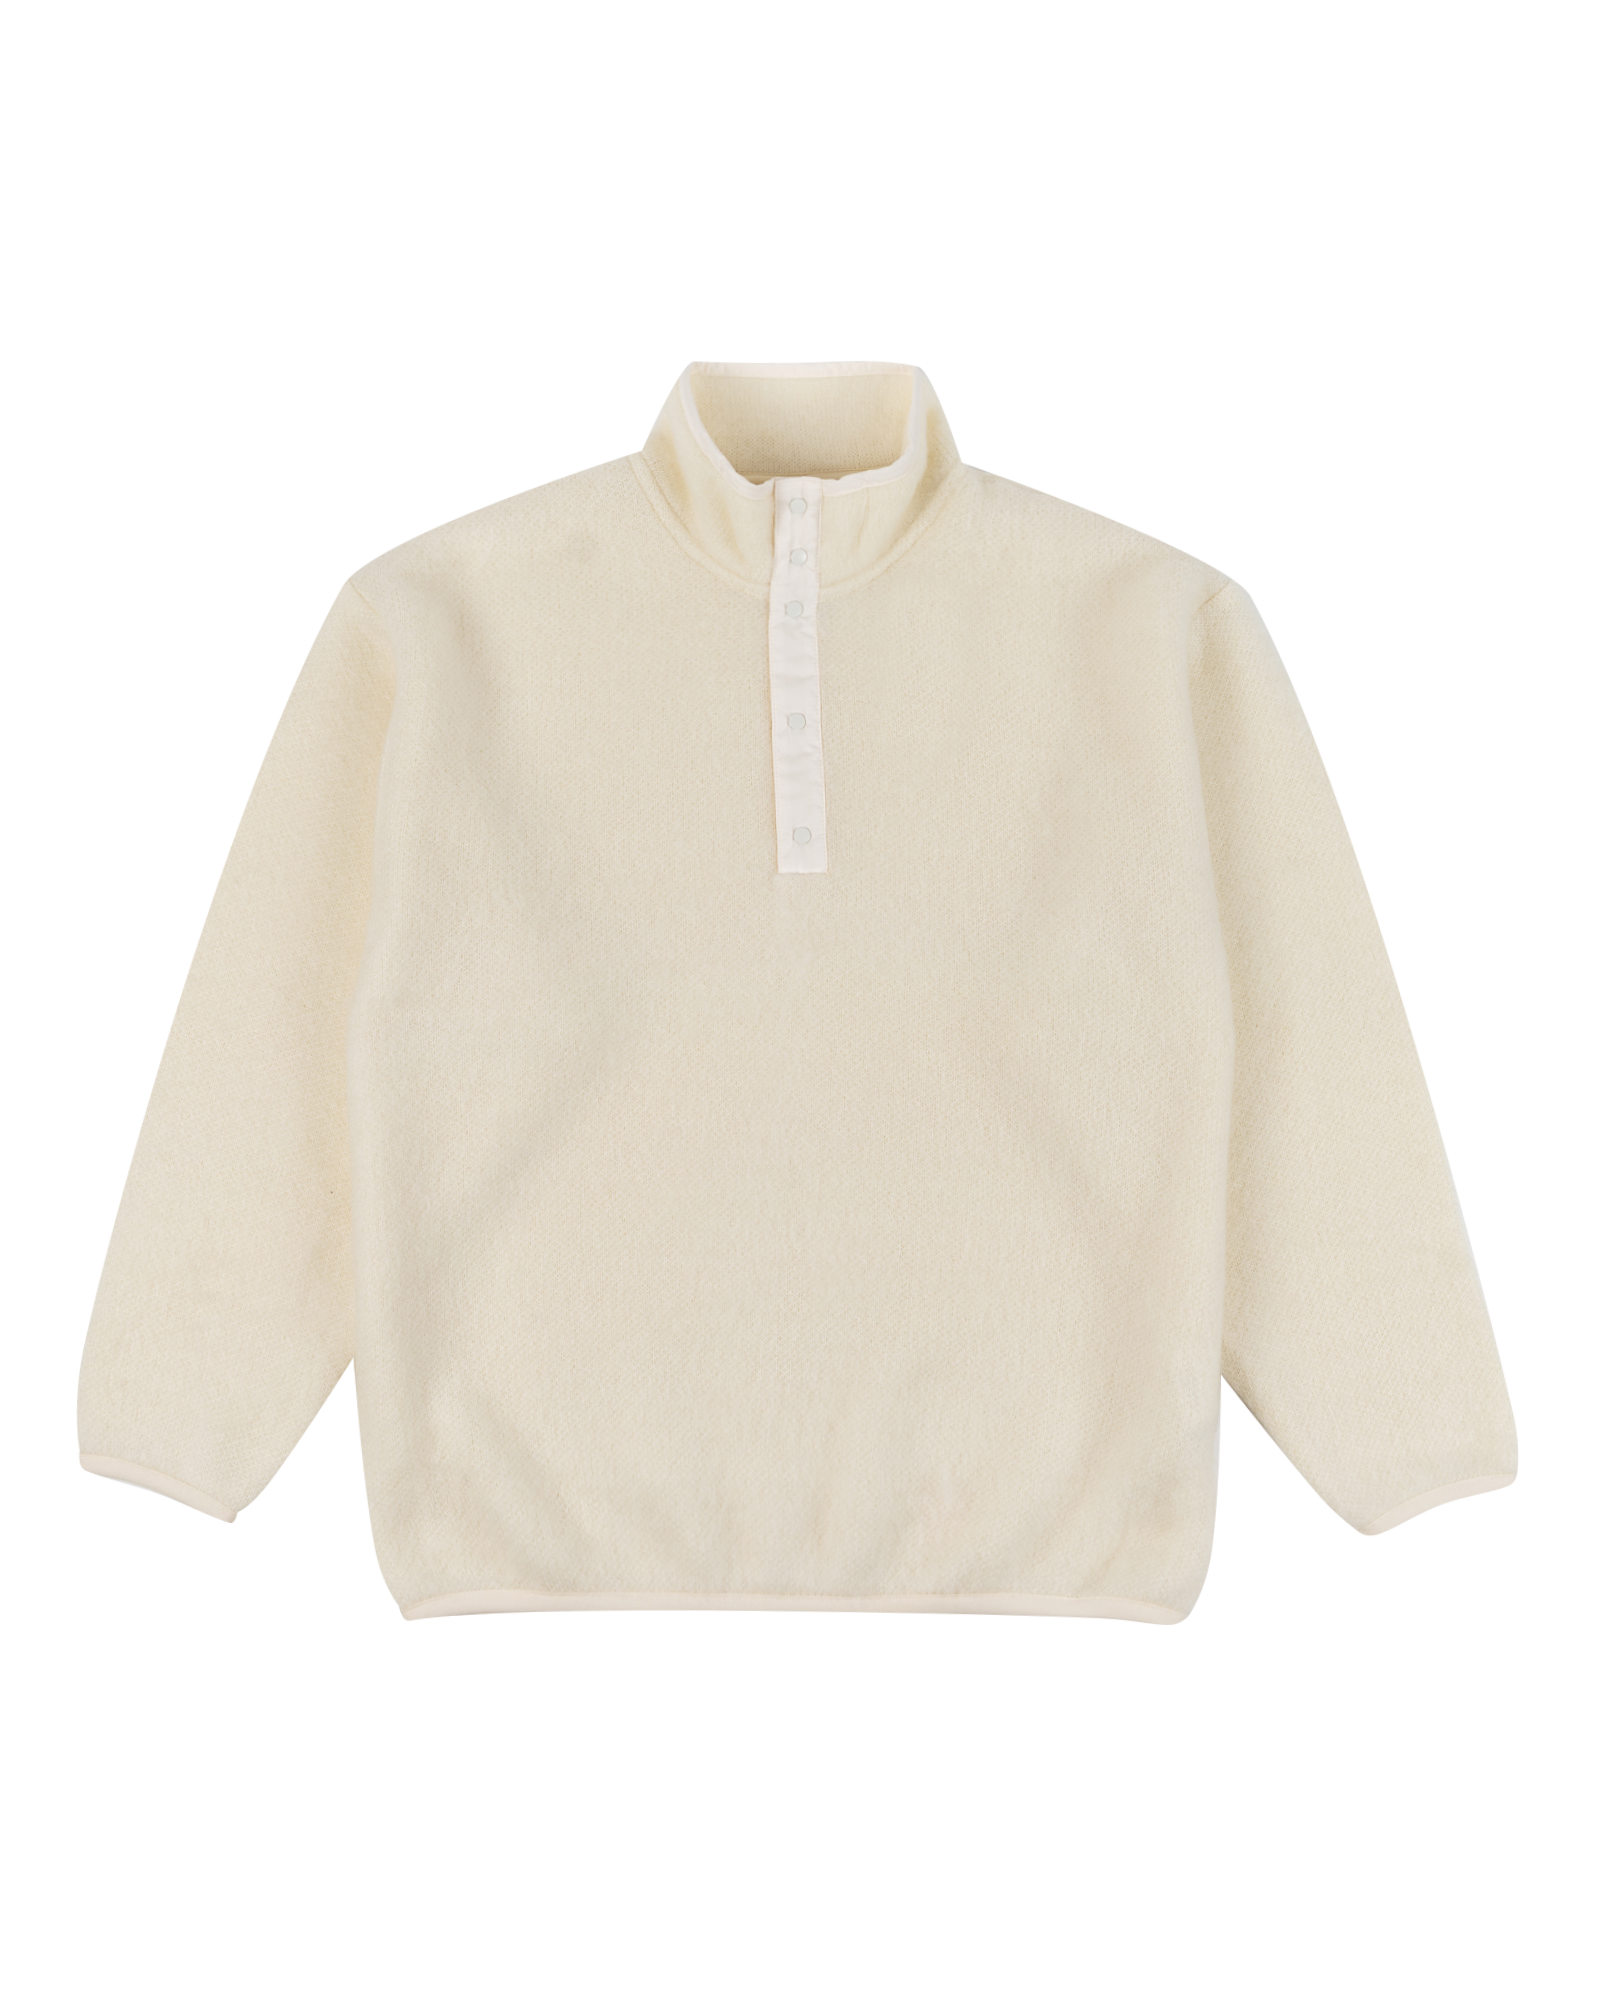 Nanamica - Jacket - Pullover - Sweater - Natural